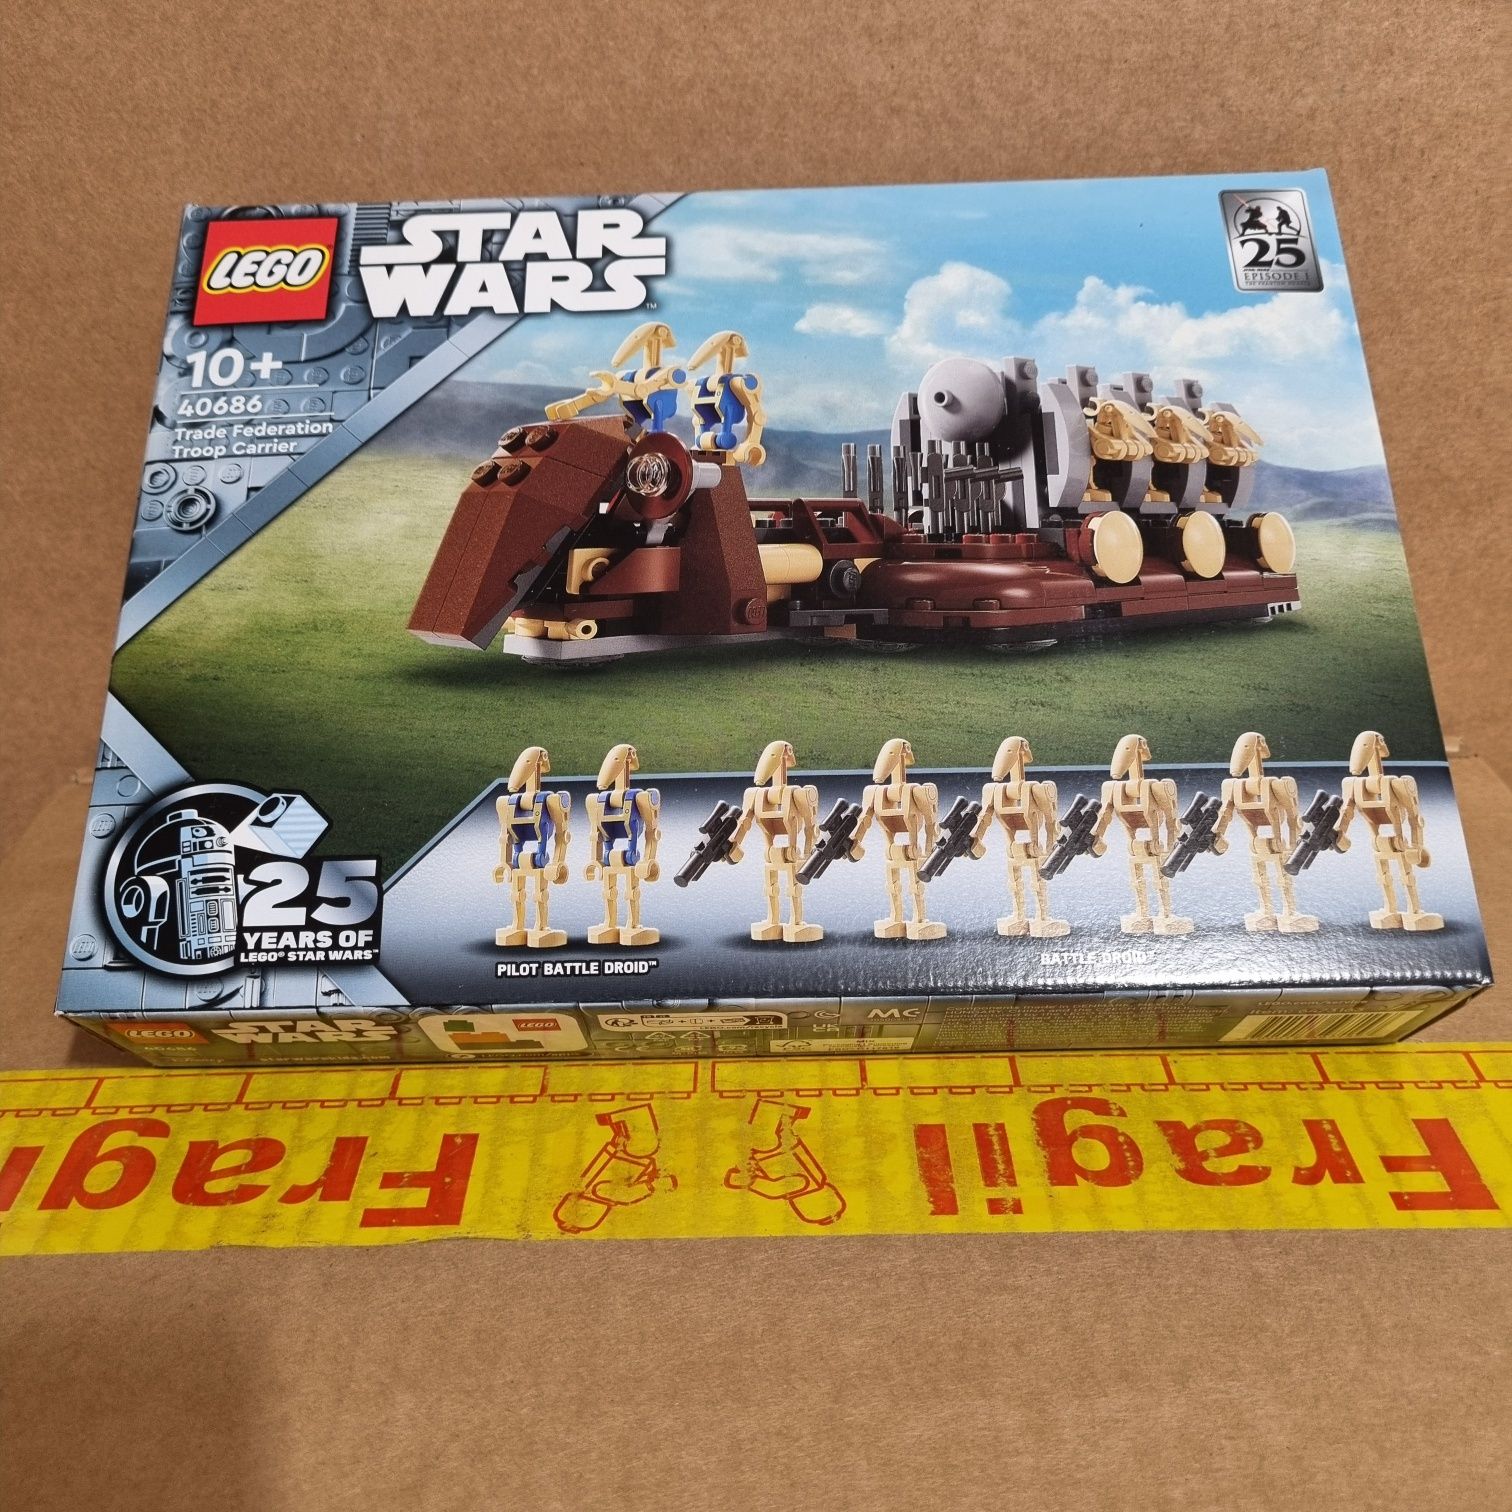 Lego StarWars 40686 Troop Carrier